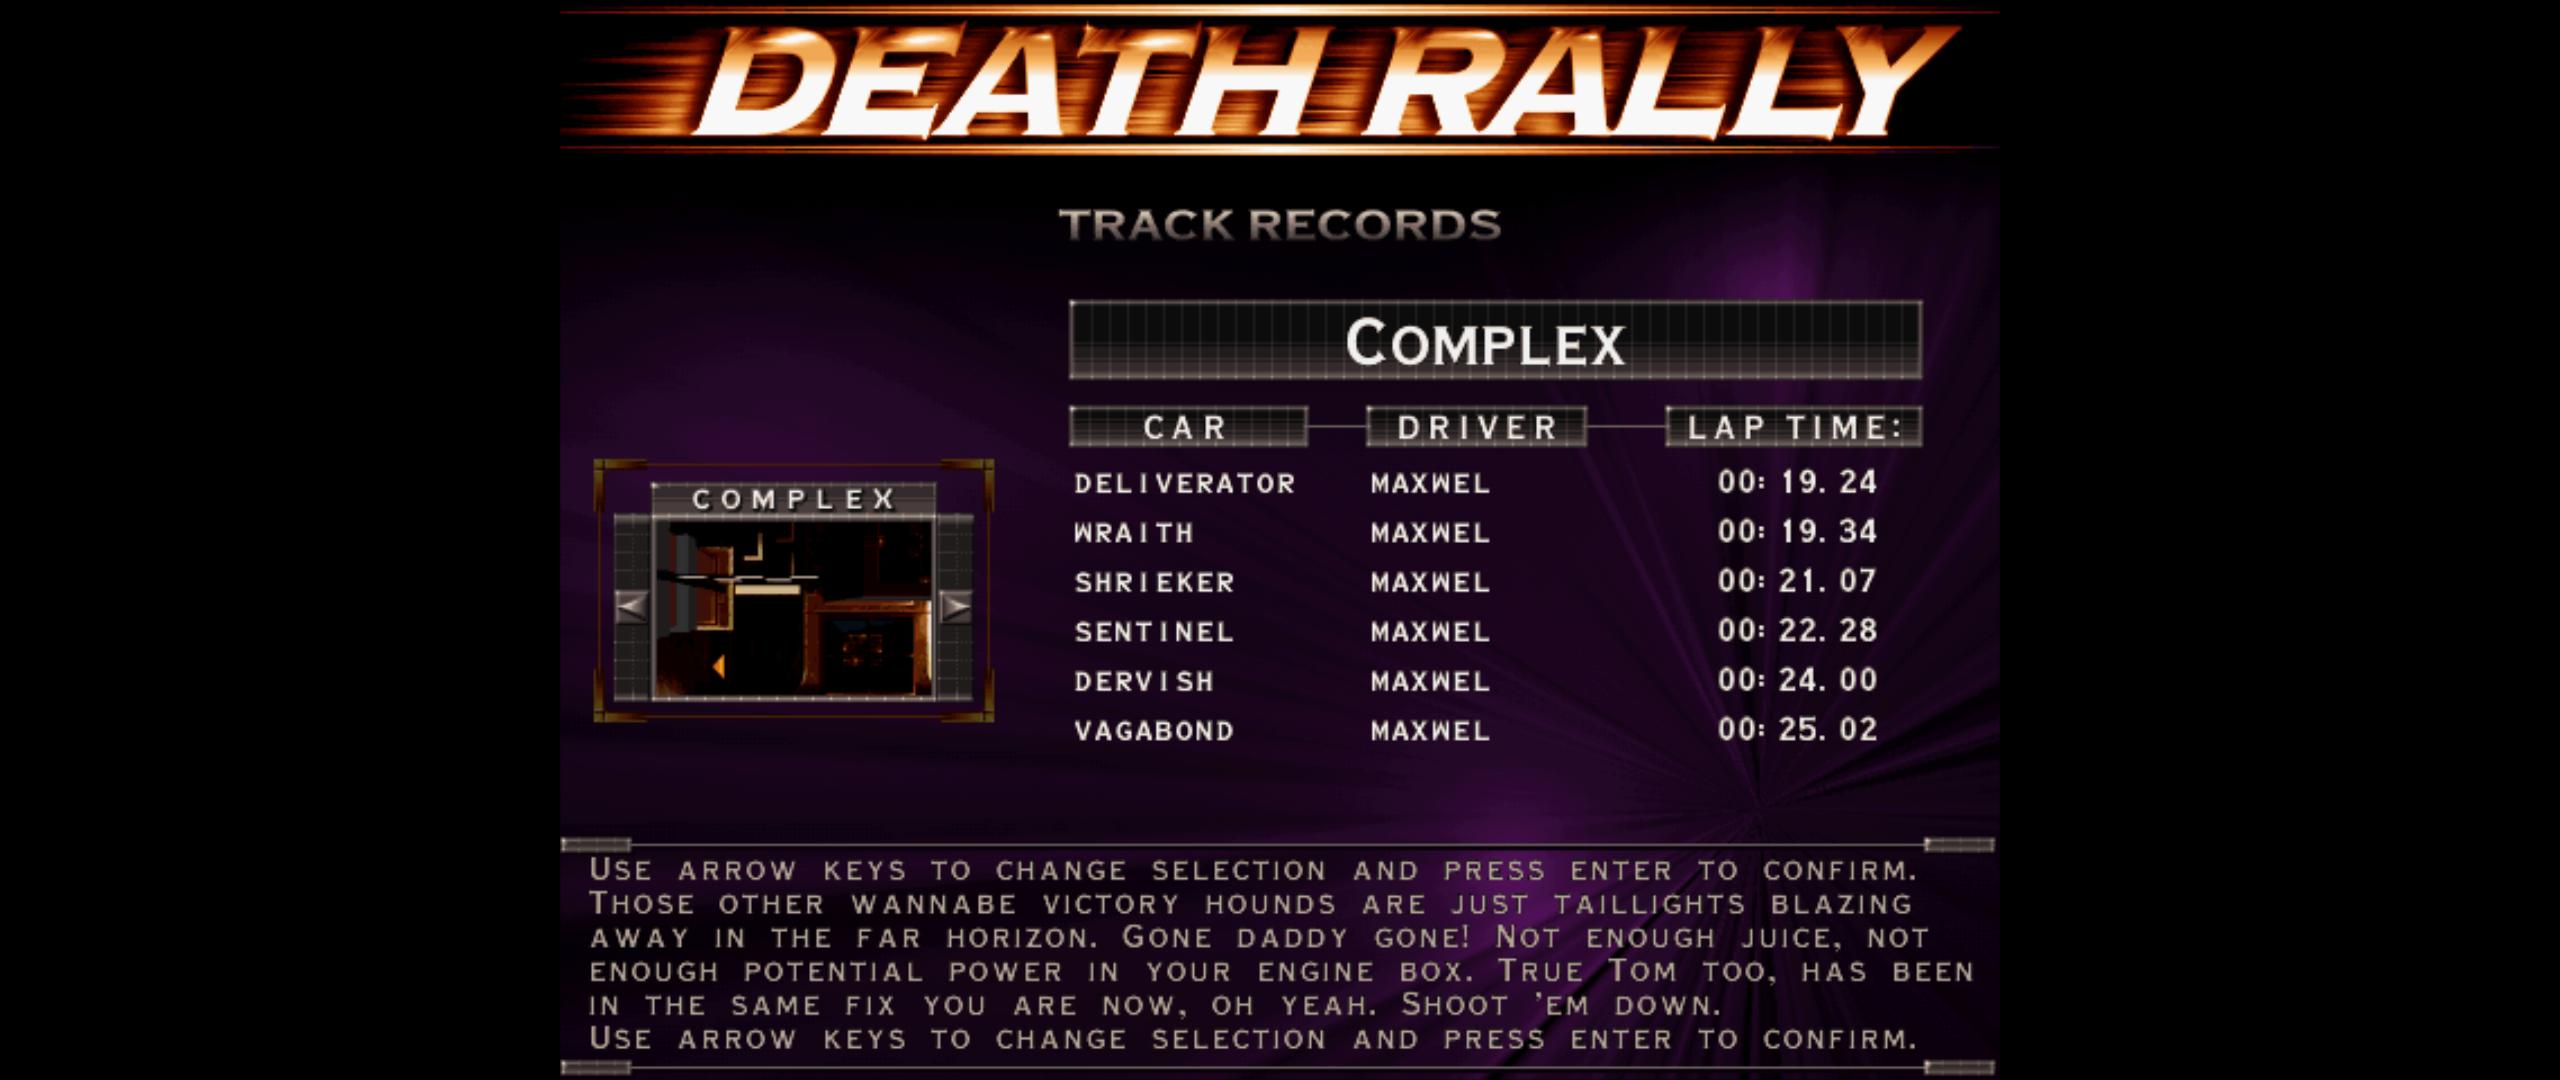 Maxwel: Death Rally [Complex, Sentinel Car] (PC) 0:00:22.28 points on 2016-03-04 06:43:12